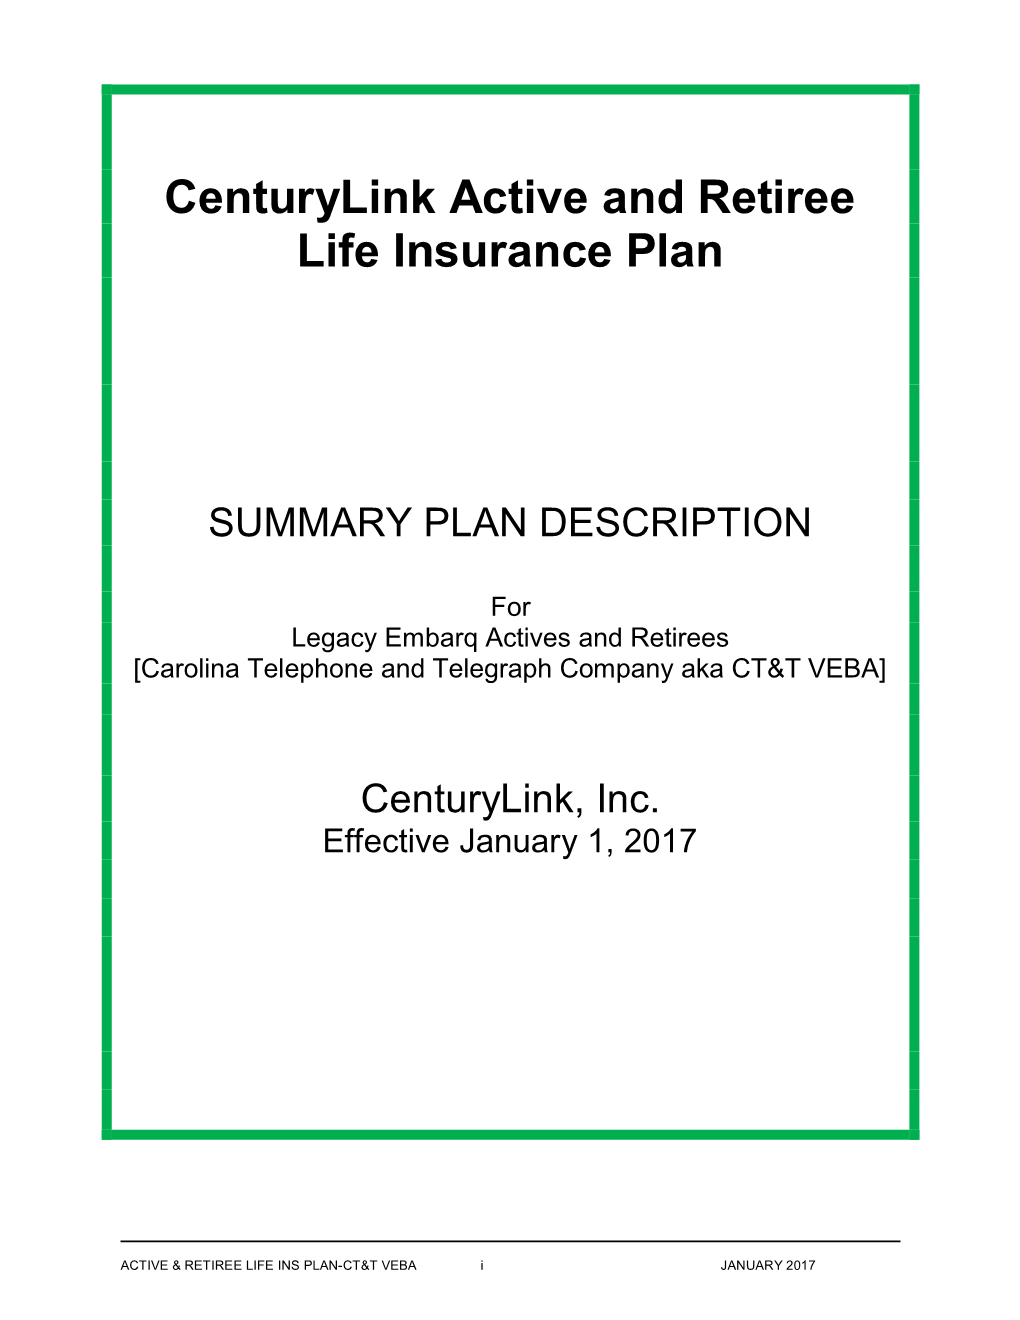 Centurylink Active and Retiree Life Insurance Plan